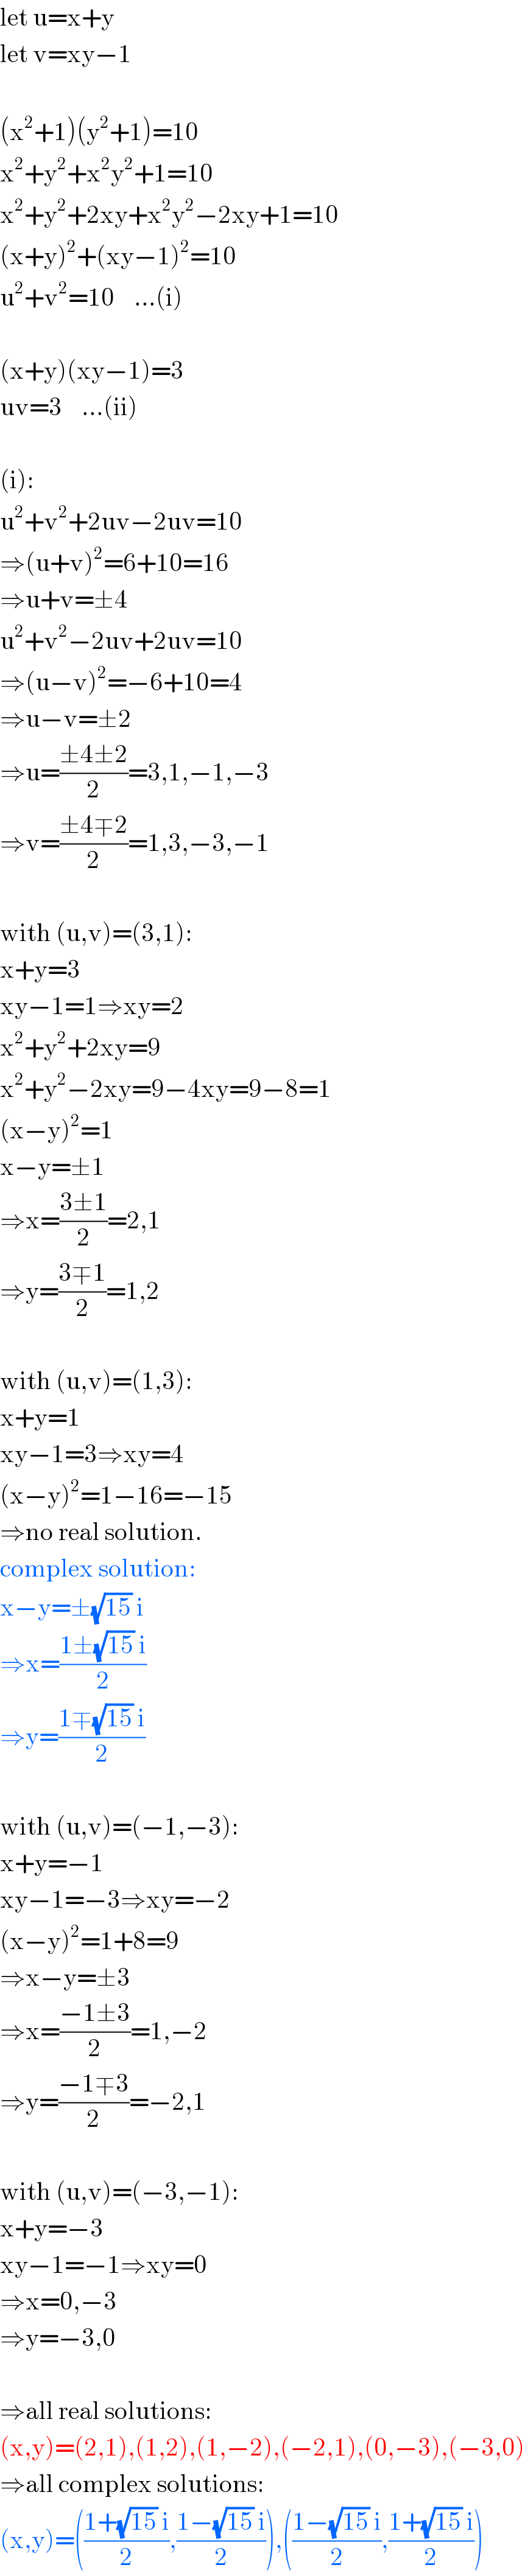 let u=x+y  let v=xy−1    (x^2 +1)(y^2 +1)=10  x^2 +y^2 +x^2 y^2 +1=10  x^2 +y^2 +2xy+x^2 y^2 −2xy+1=10  (x+y)^2 +(xy−1)^2 =10  u^2 +v^2 =10    ...(i)    (x+y)(xy−1)=3  uv=3    ...(ii)    (i):  u^2 +v^2 +2uv−2uv=10  ⇒(u+v)^2 =6+10=16  ⇒u+v=±4  u^2 +v^2 −2uv+2uv=10  ⇒(u−v)^2 =−6+10=4  ⇒u−v=±2  ⇒u=((±4±2)/2)=3,1,−1,−3  ⇒v=((±4∓2)/2)=1,3,−3,−1    with (u,v)=(3,1):  x+y=3  xy−1=1⇒xy=2  x^2 +y^2 +2xy=9  x^2 +y^2 −2xy=9−4xy=9−8=1  (x−y)^2 =1  x−y=±1  ⇒x=((3±1)/2)=2,1  ⇒y=((3∓1)/2)=1,2    with (u,v)=(1,3):  x+y=1  xy−1=3⇒xy=4  (x−y)^2 =1−16=−15  ⇒no real solution.  complex solution:  x−y=±(√(15)) i  ⇒x=((1±(√(15)) i)/2)  ⇒y=((1∓(√(15)) i)/2)    with (u,v)=(−1,−3):  x+y=−1  xy−1=−3⇒xy=−2  (x−y)^2 =1+8=9  ⇒x−y=±3  ⇒x=((−1±3)/2)=1,−2  ⇒y=((−1∓3)/2)=−2,1    with (u,v)=(−3,−1):  x+y=−3  xy−1=−1⇒xy=0  ⇒x=0,−3  ⇒y=−3,0    ⇒all real solutions:  (x,y)=(2,1),(1,2),(1,−2),(−2,1),(0,−3),(−3,0)  ⇒all complex solutions:  (x,y)=(((1+(√(15)) i)/2),((1−(√(15)) i)/2)),(((1−(√(15)) i)/2),((1+(√(15)) i)/2))  